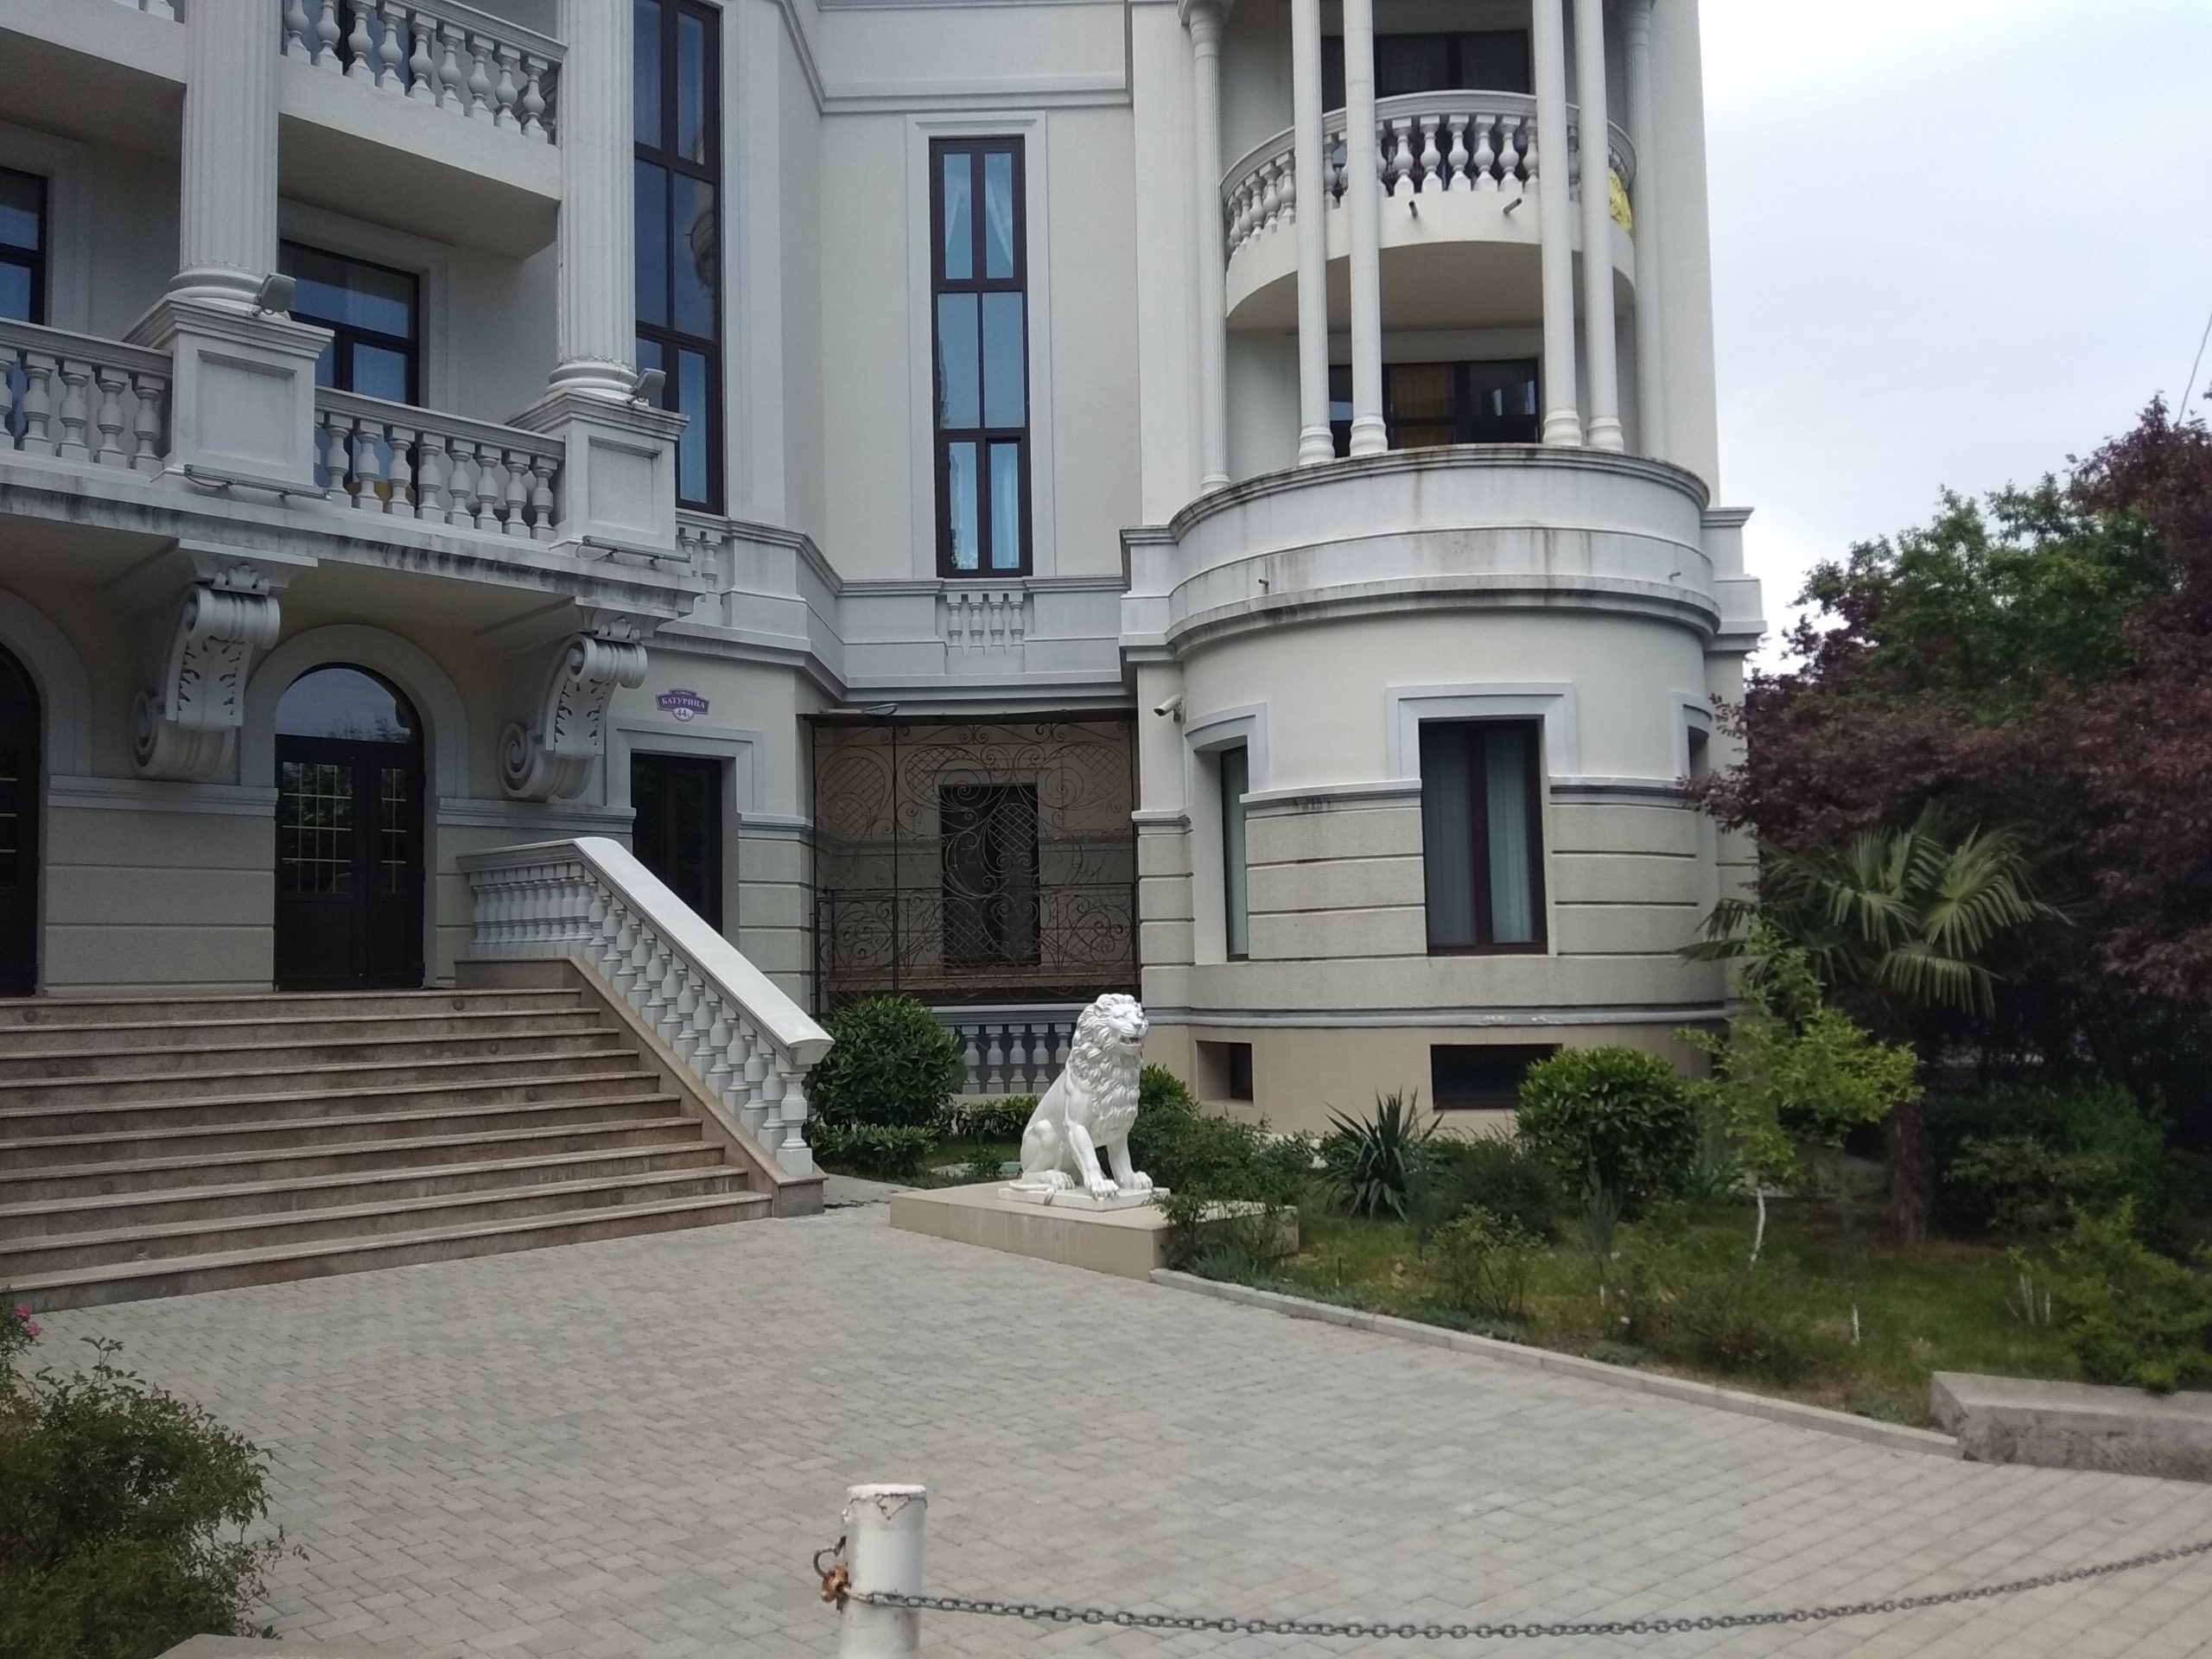 Квартира Зеленского В Крыму Фото